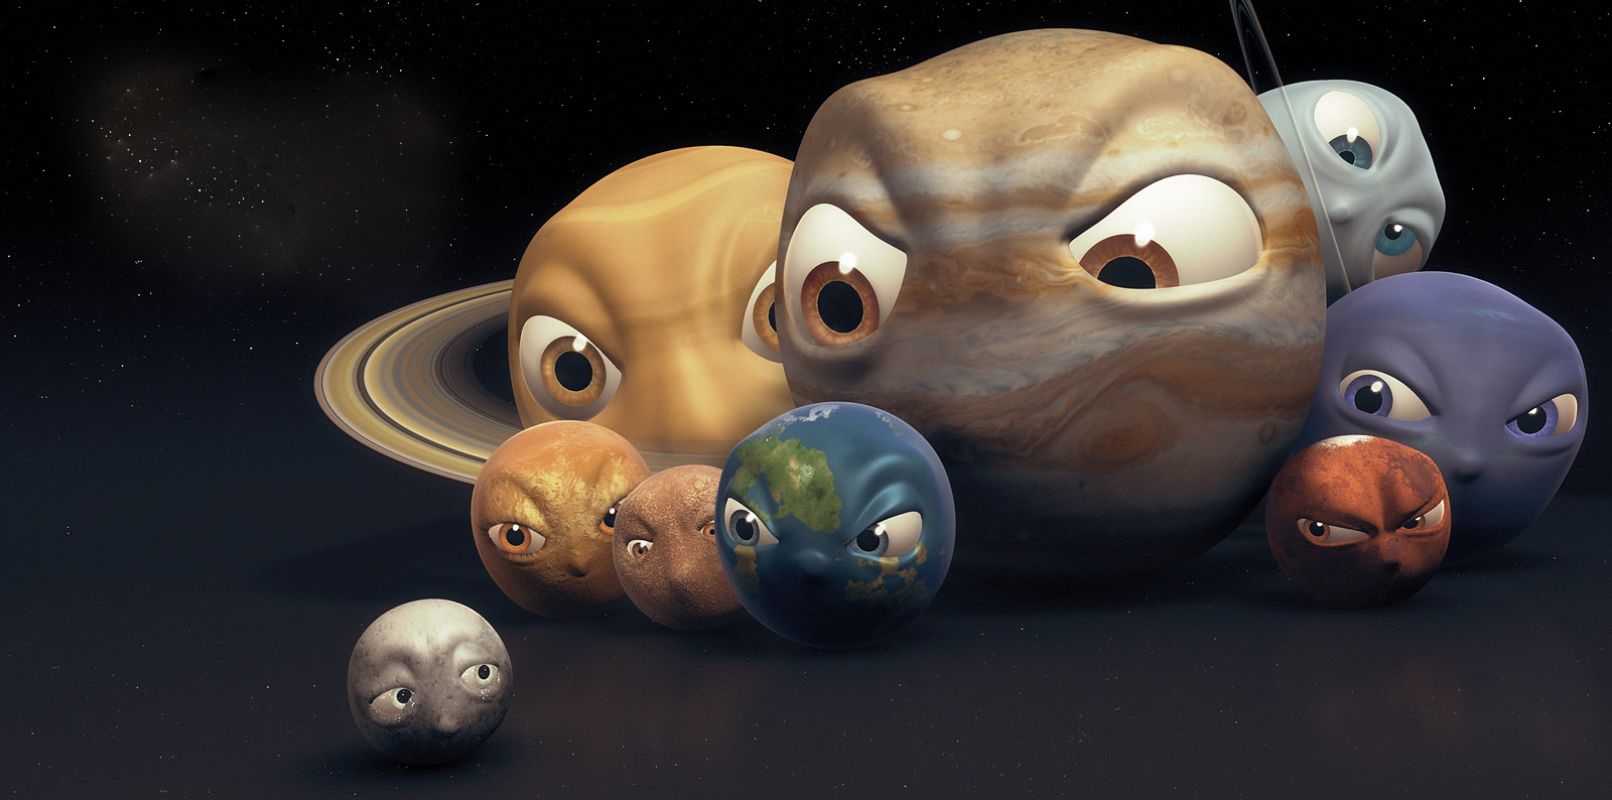 чому плутон вигнали з родини великих планет